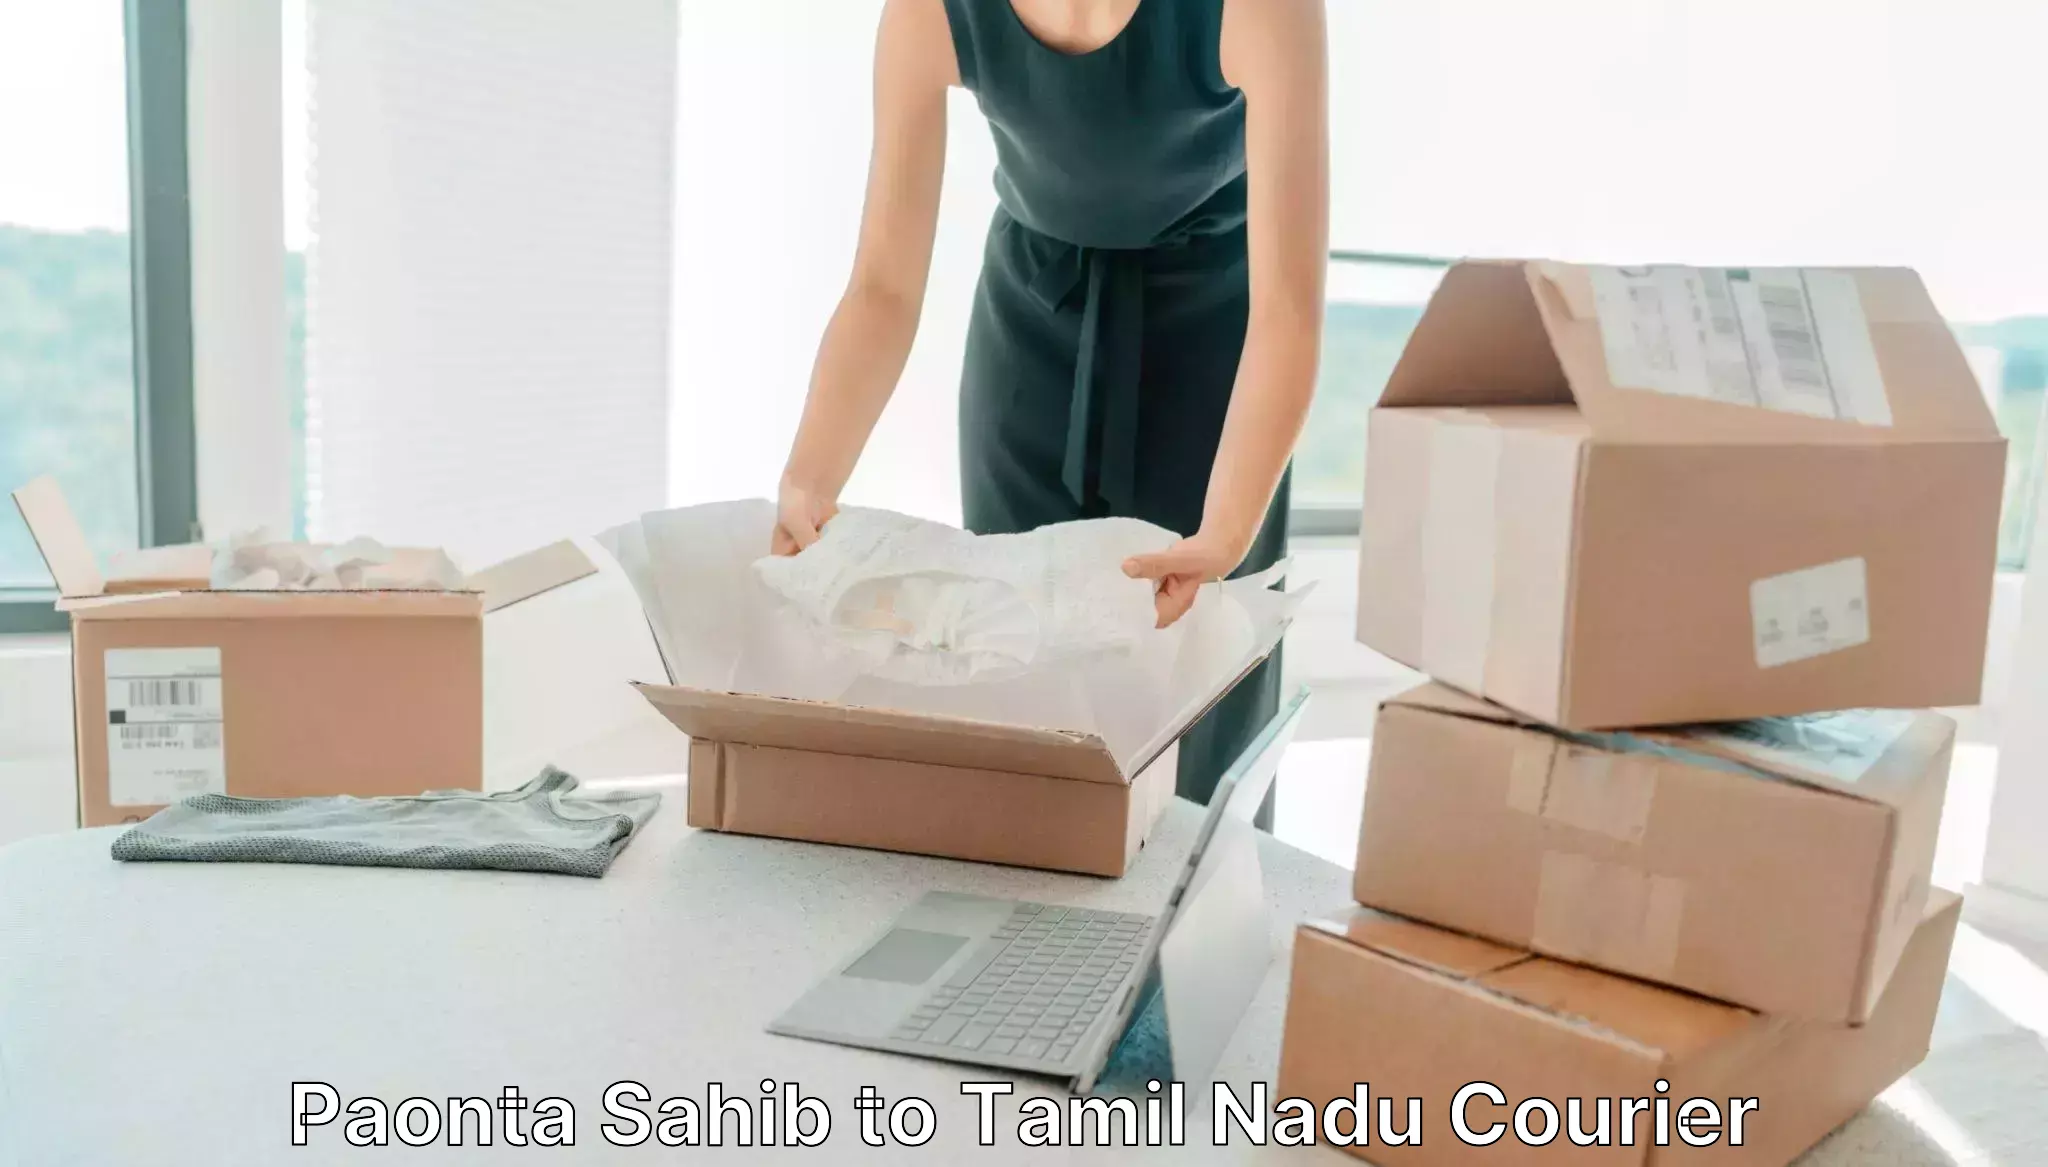 Courier service partnerships Paonta Sahib to Tamil Nadu